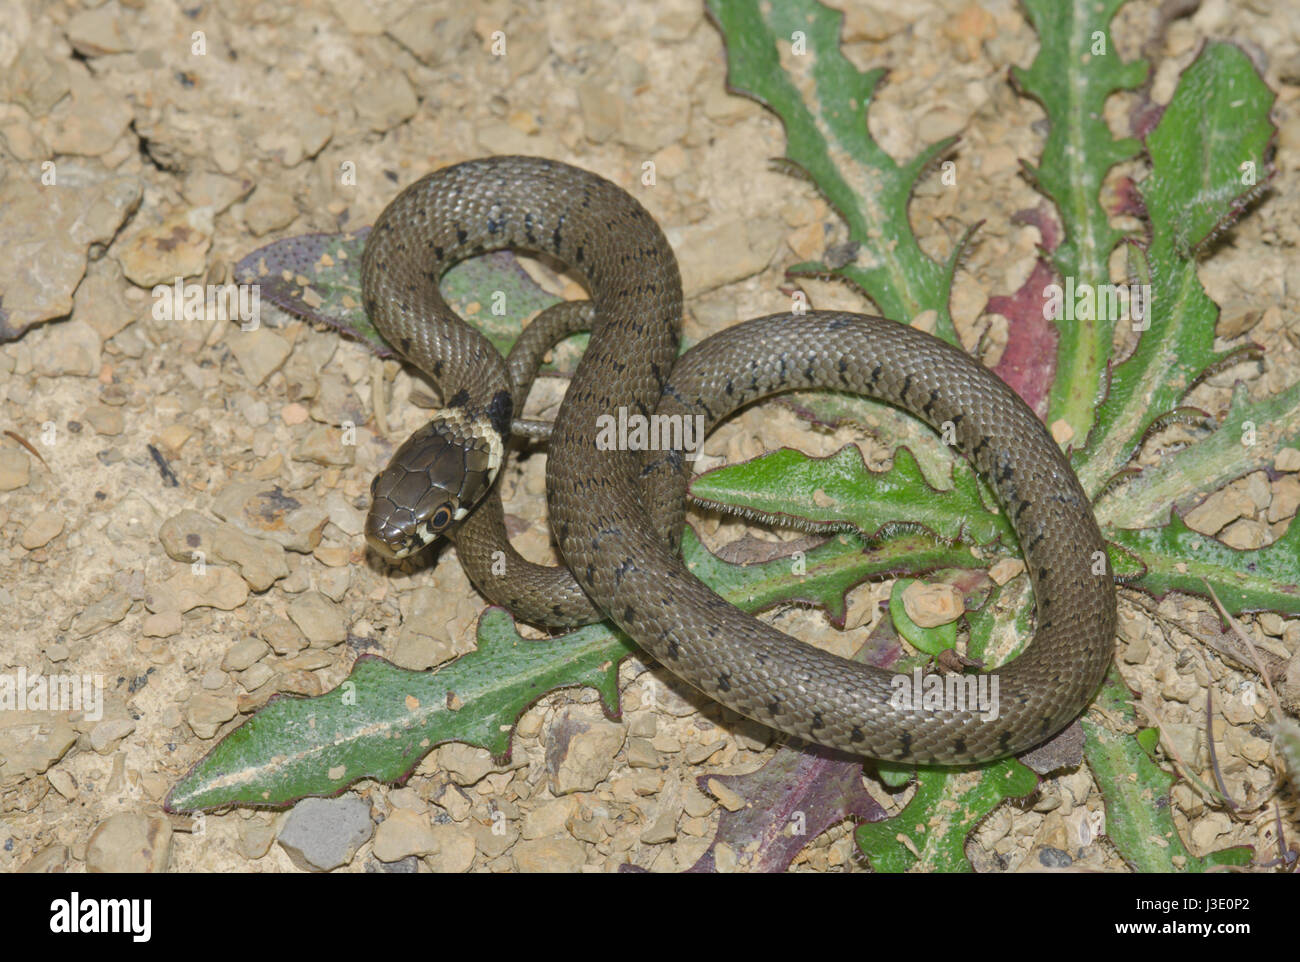 Juvenile Barred Grass Snake (Natrix helvetica) 1 of 2 Stock Photo